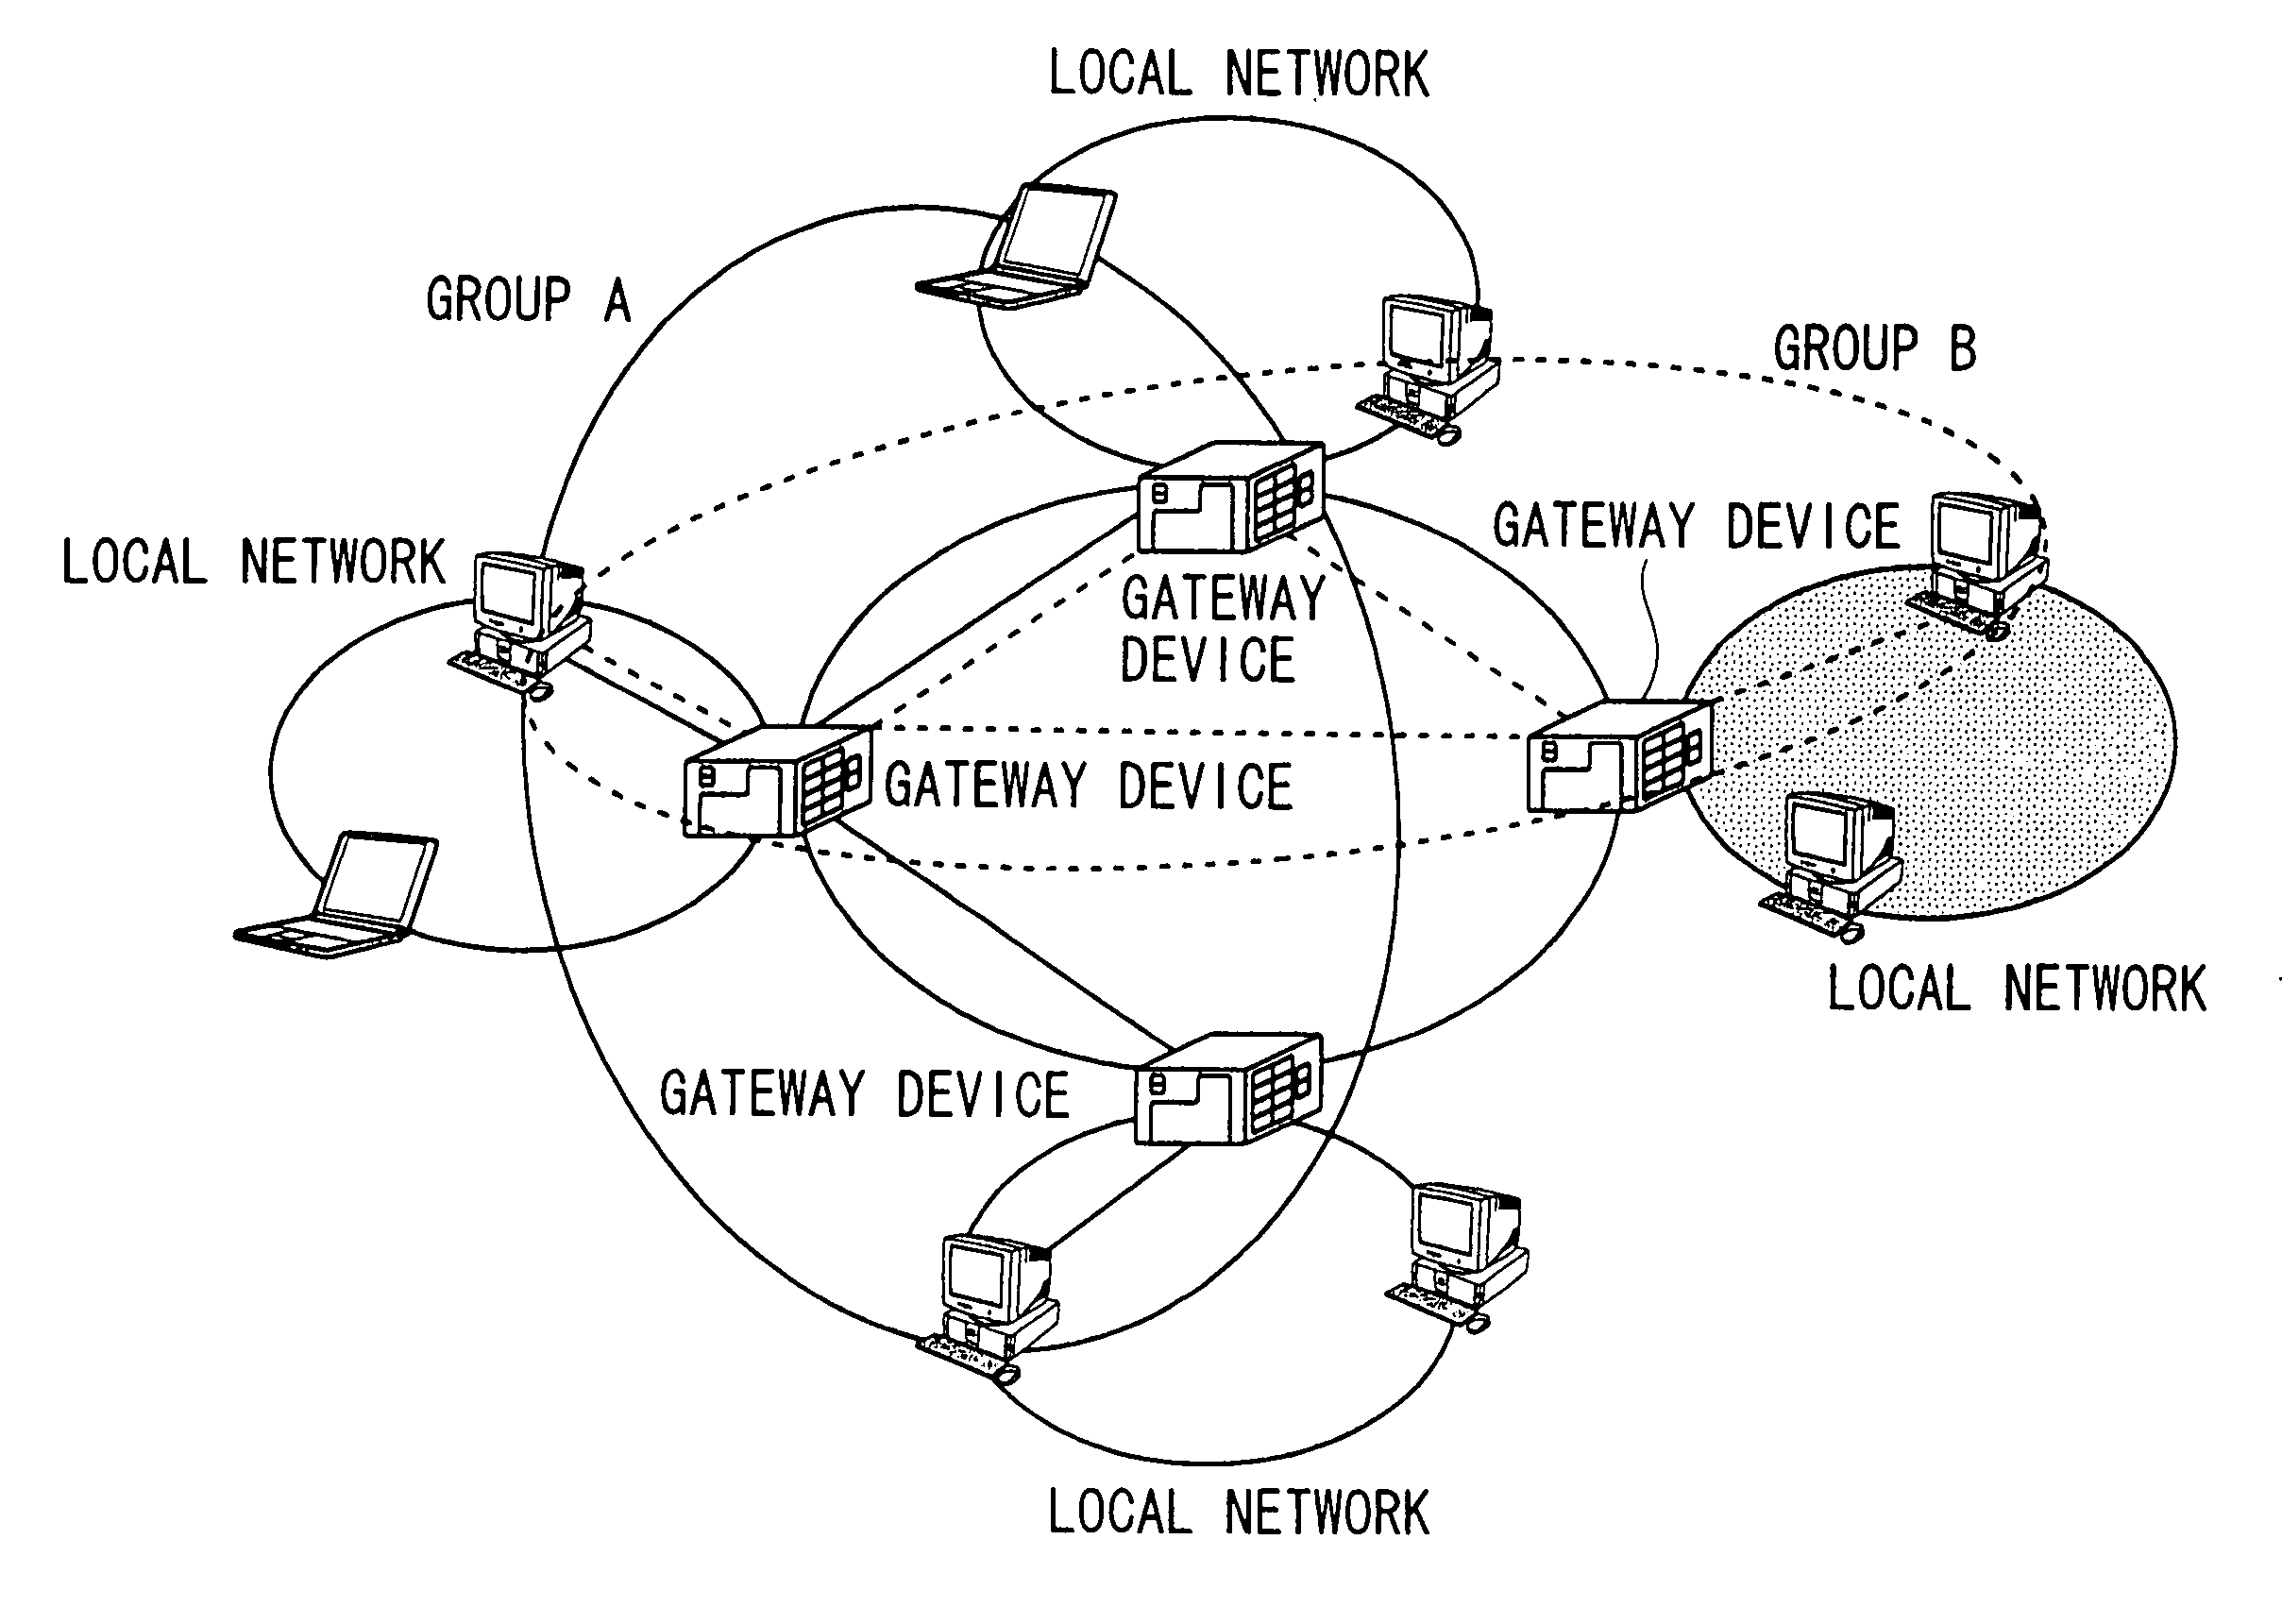 Packet relay apparatus